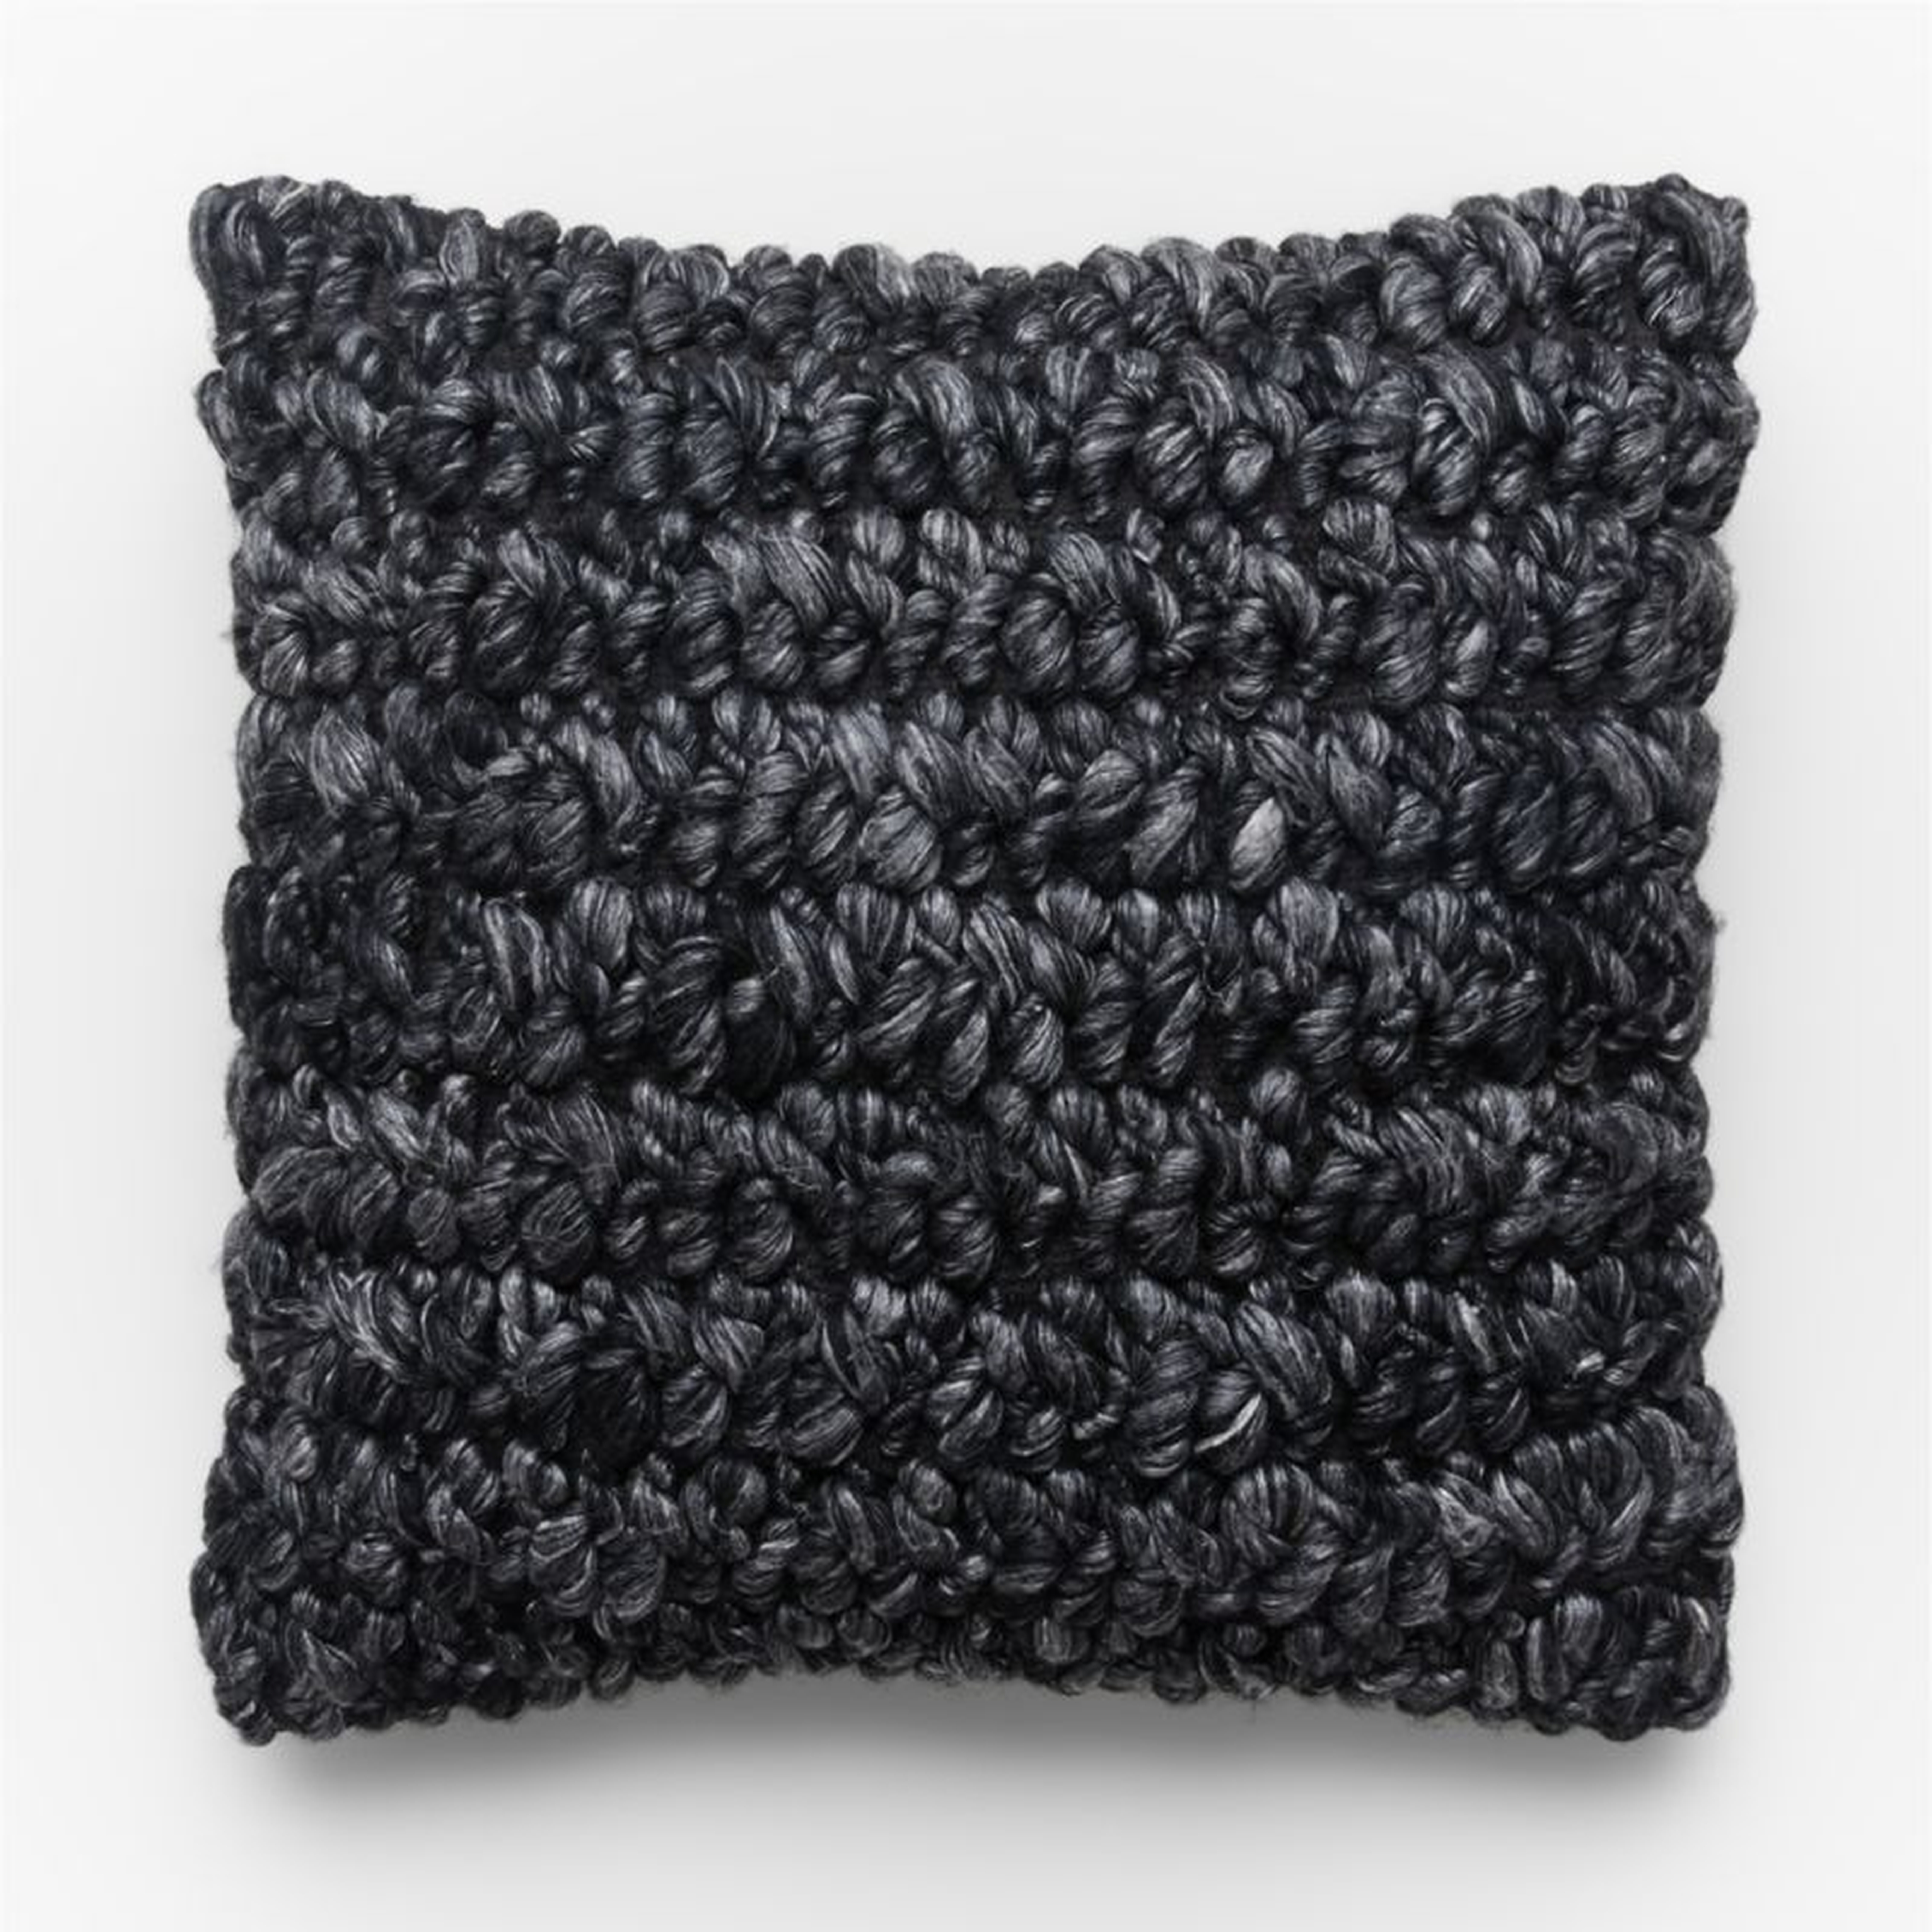 Tillie Black Wool Throw Pillow with Down-Alternative Insert 20" - CB2